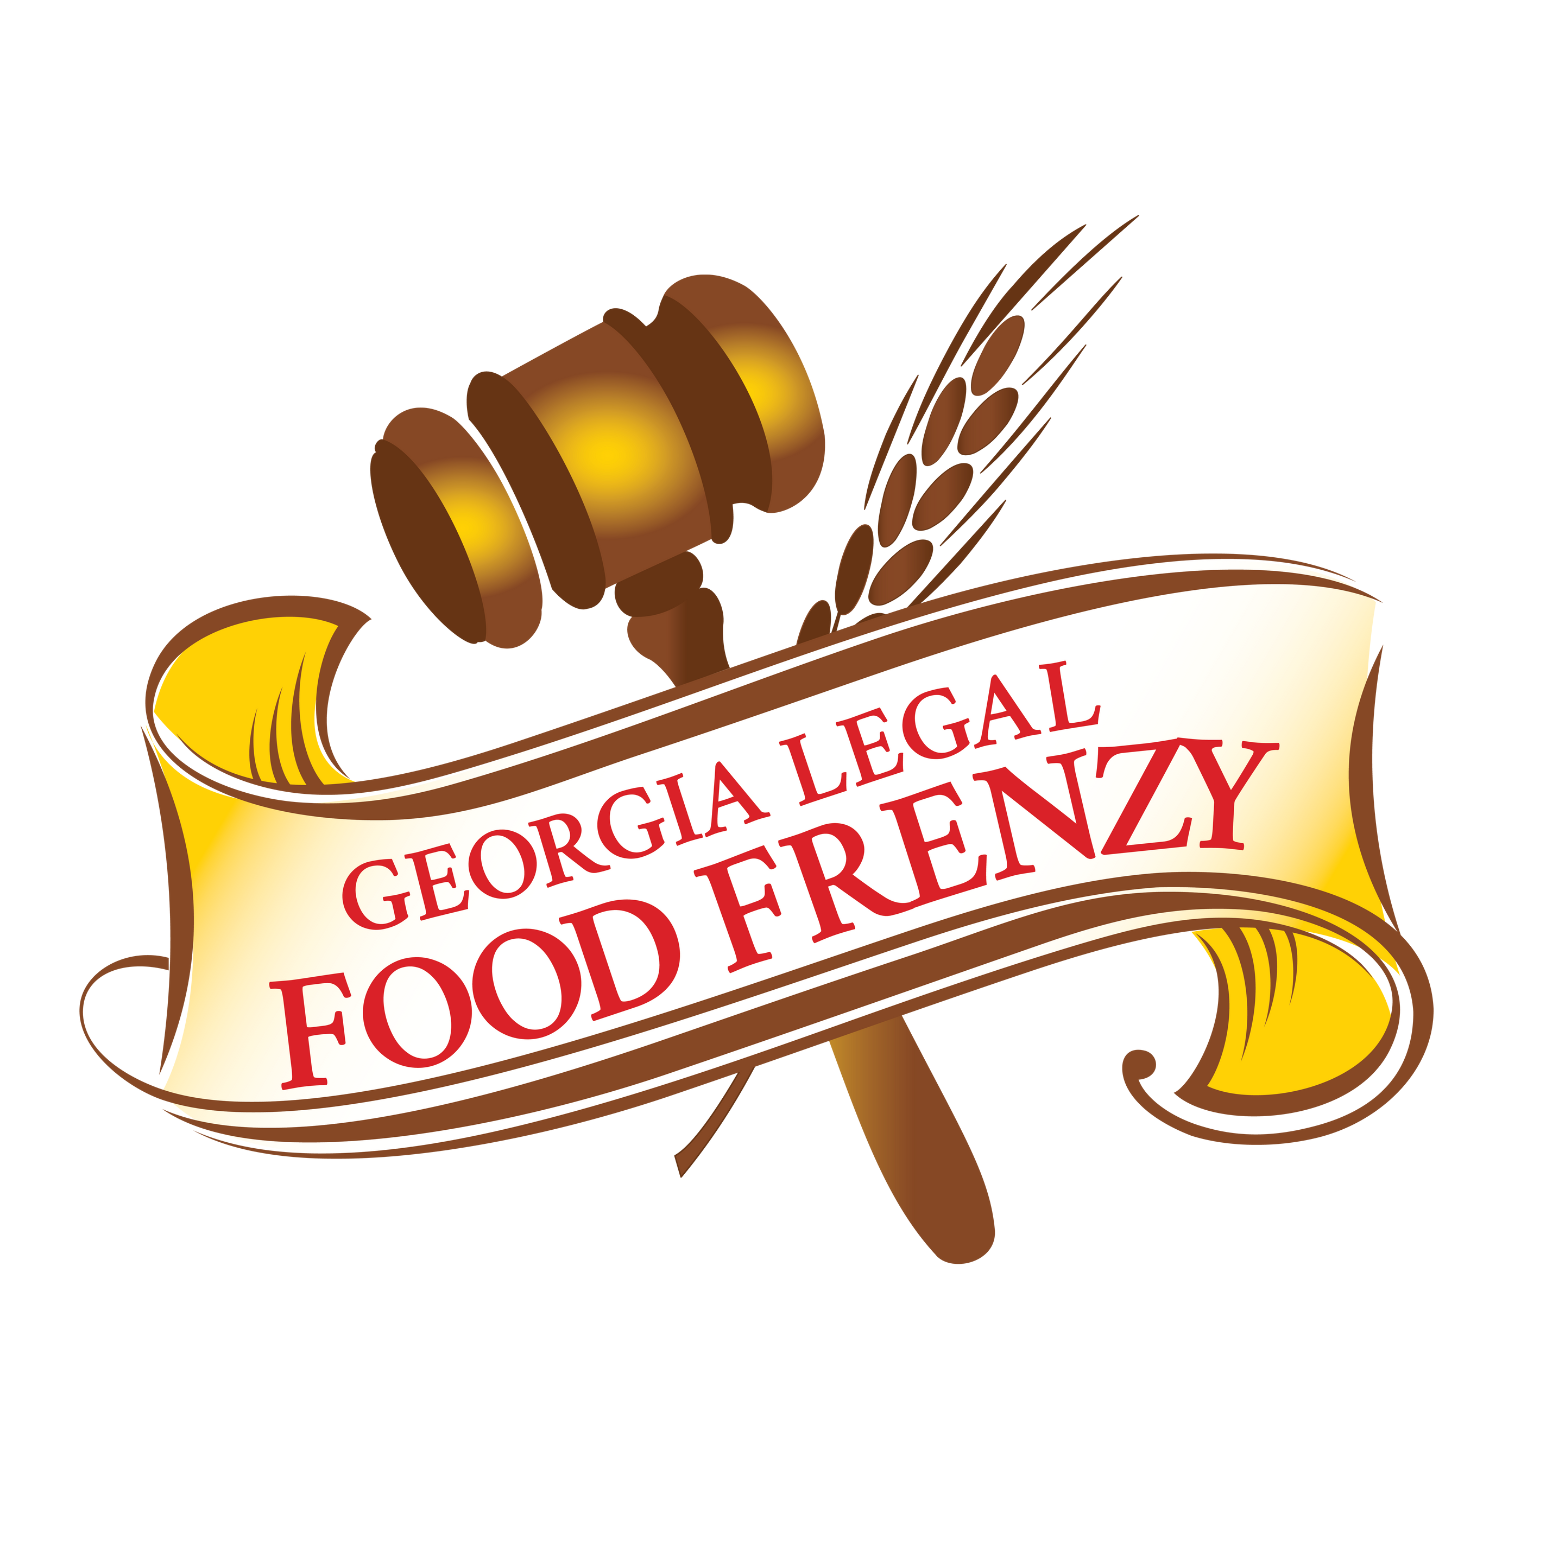 Georgia Legal Food Frenzy